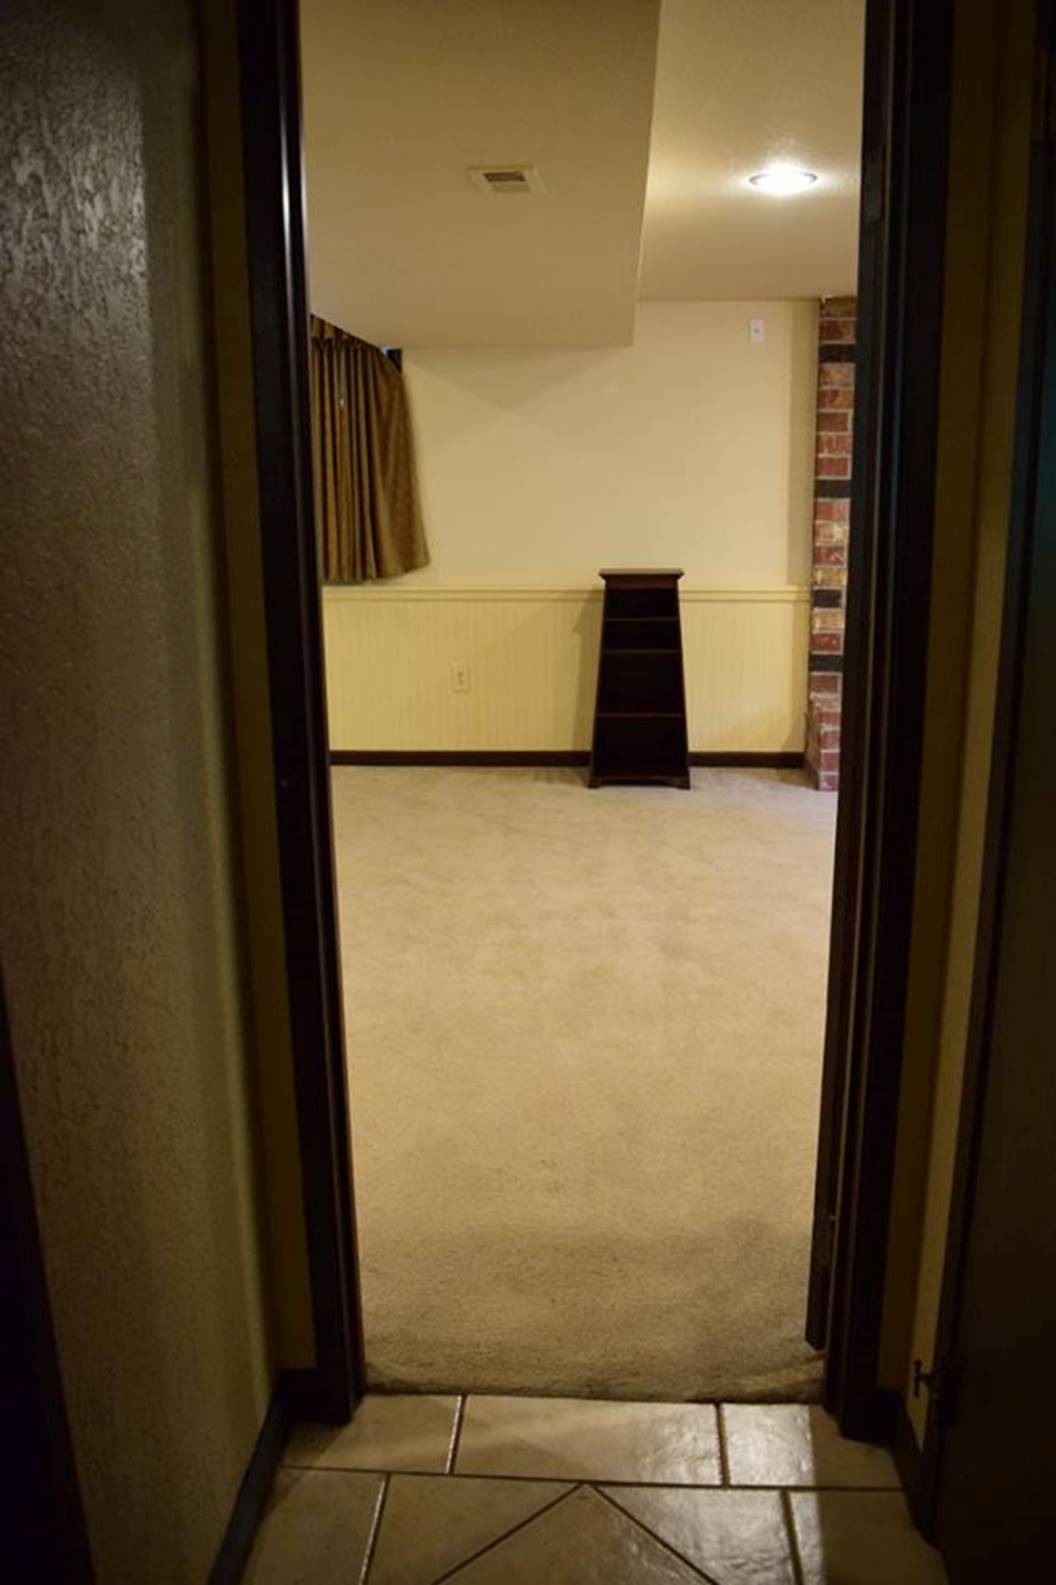 downstairs hallway view to rec room via doorway